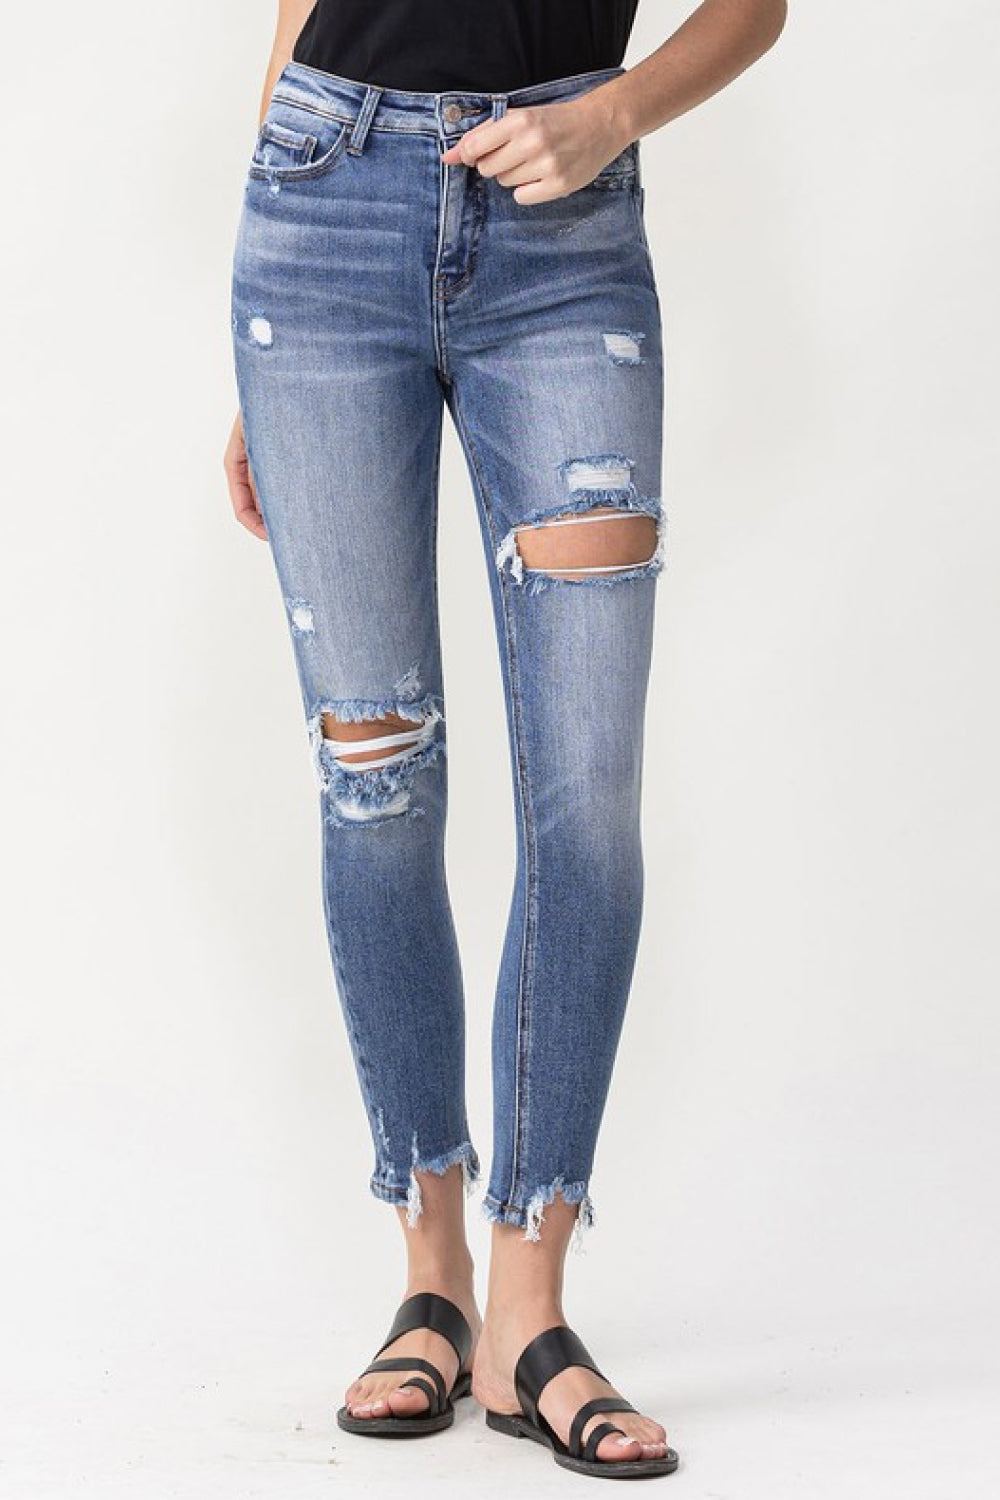 Lovervet Juliana High Rise Distressed Skinny Jeans